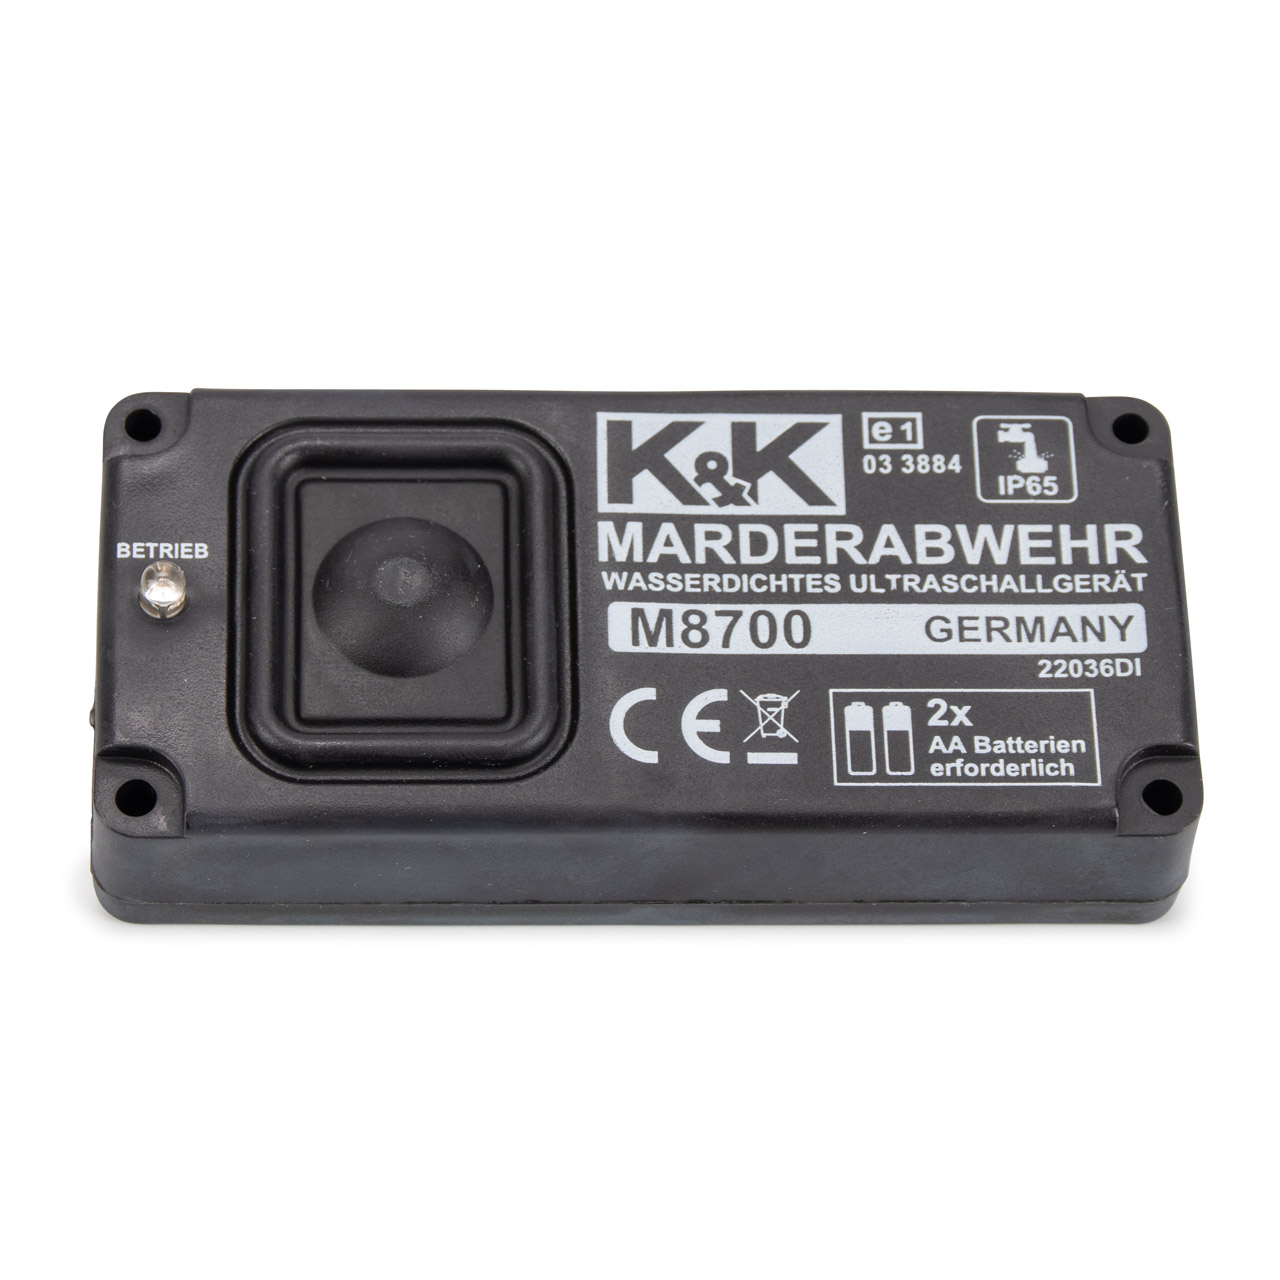 K&K M8700 Marderabwehrgerät wasserdichtes Ultraschallgerät Batteriebetrieb